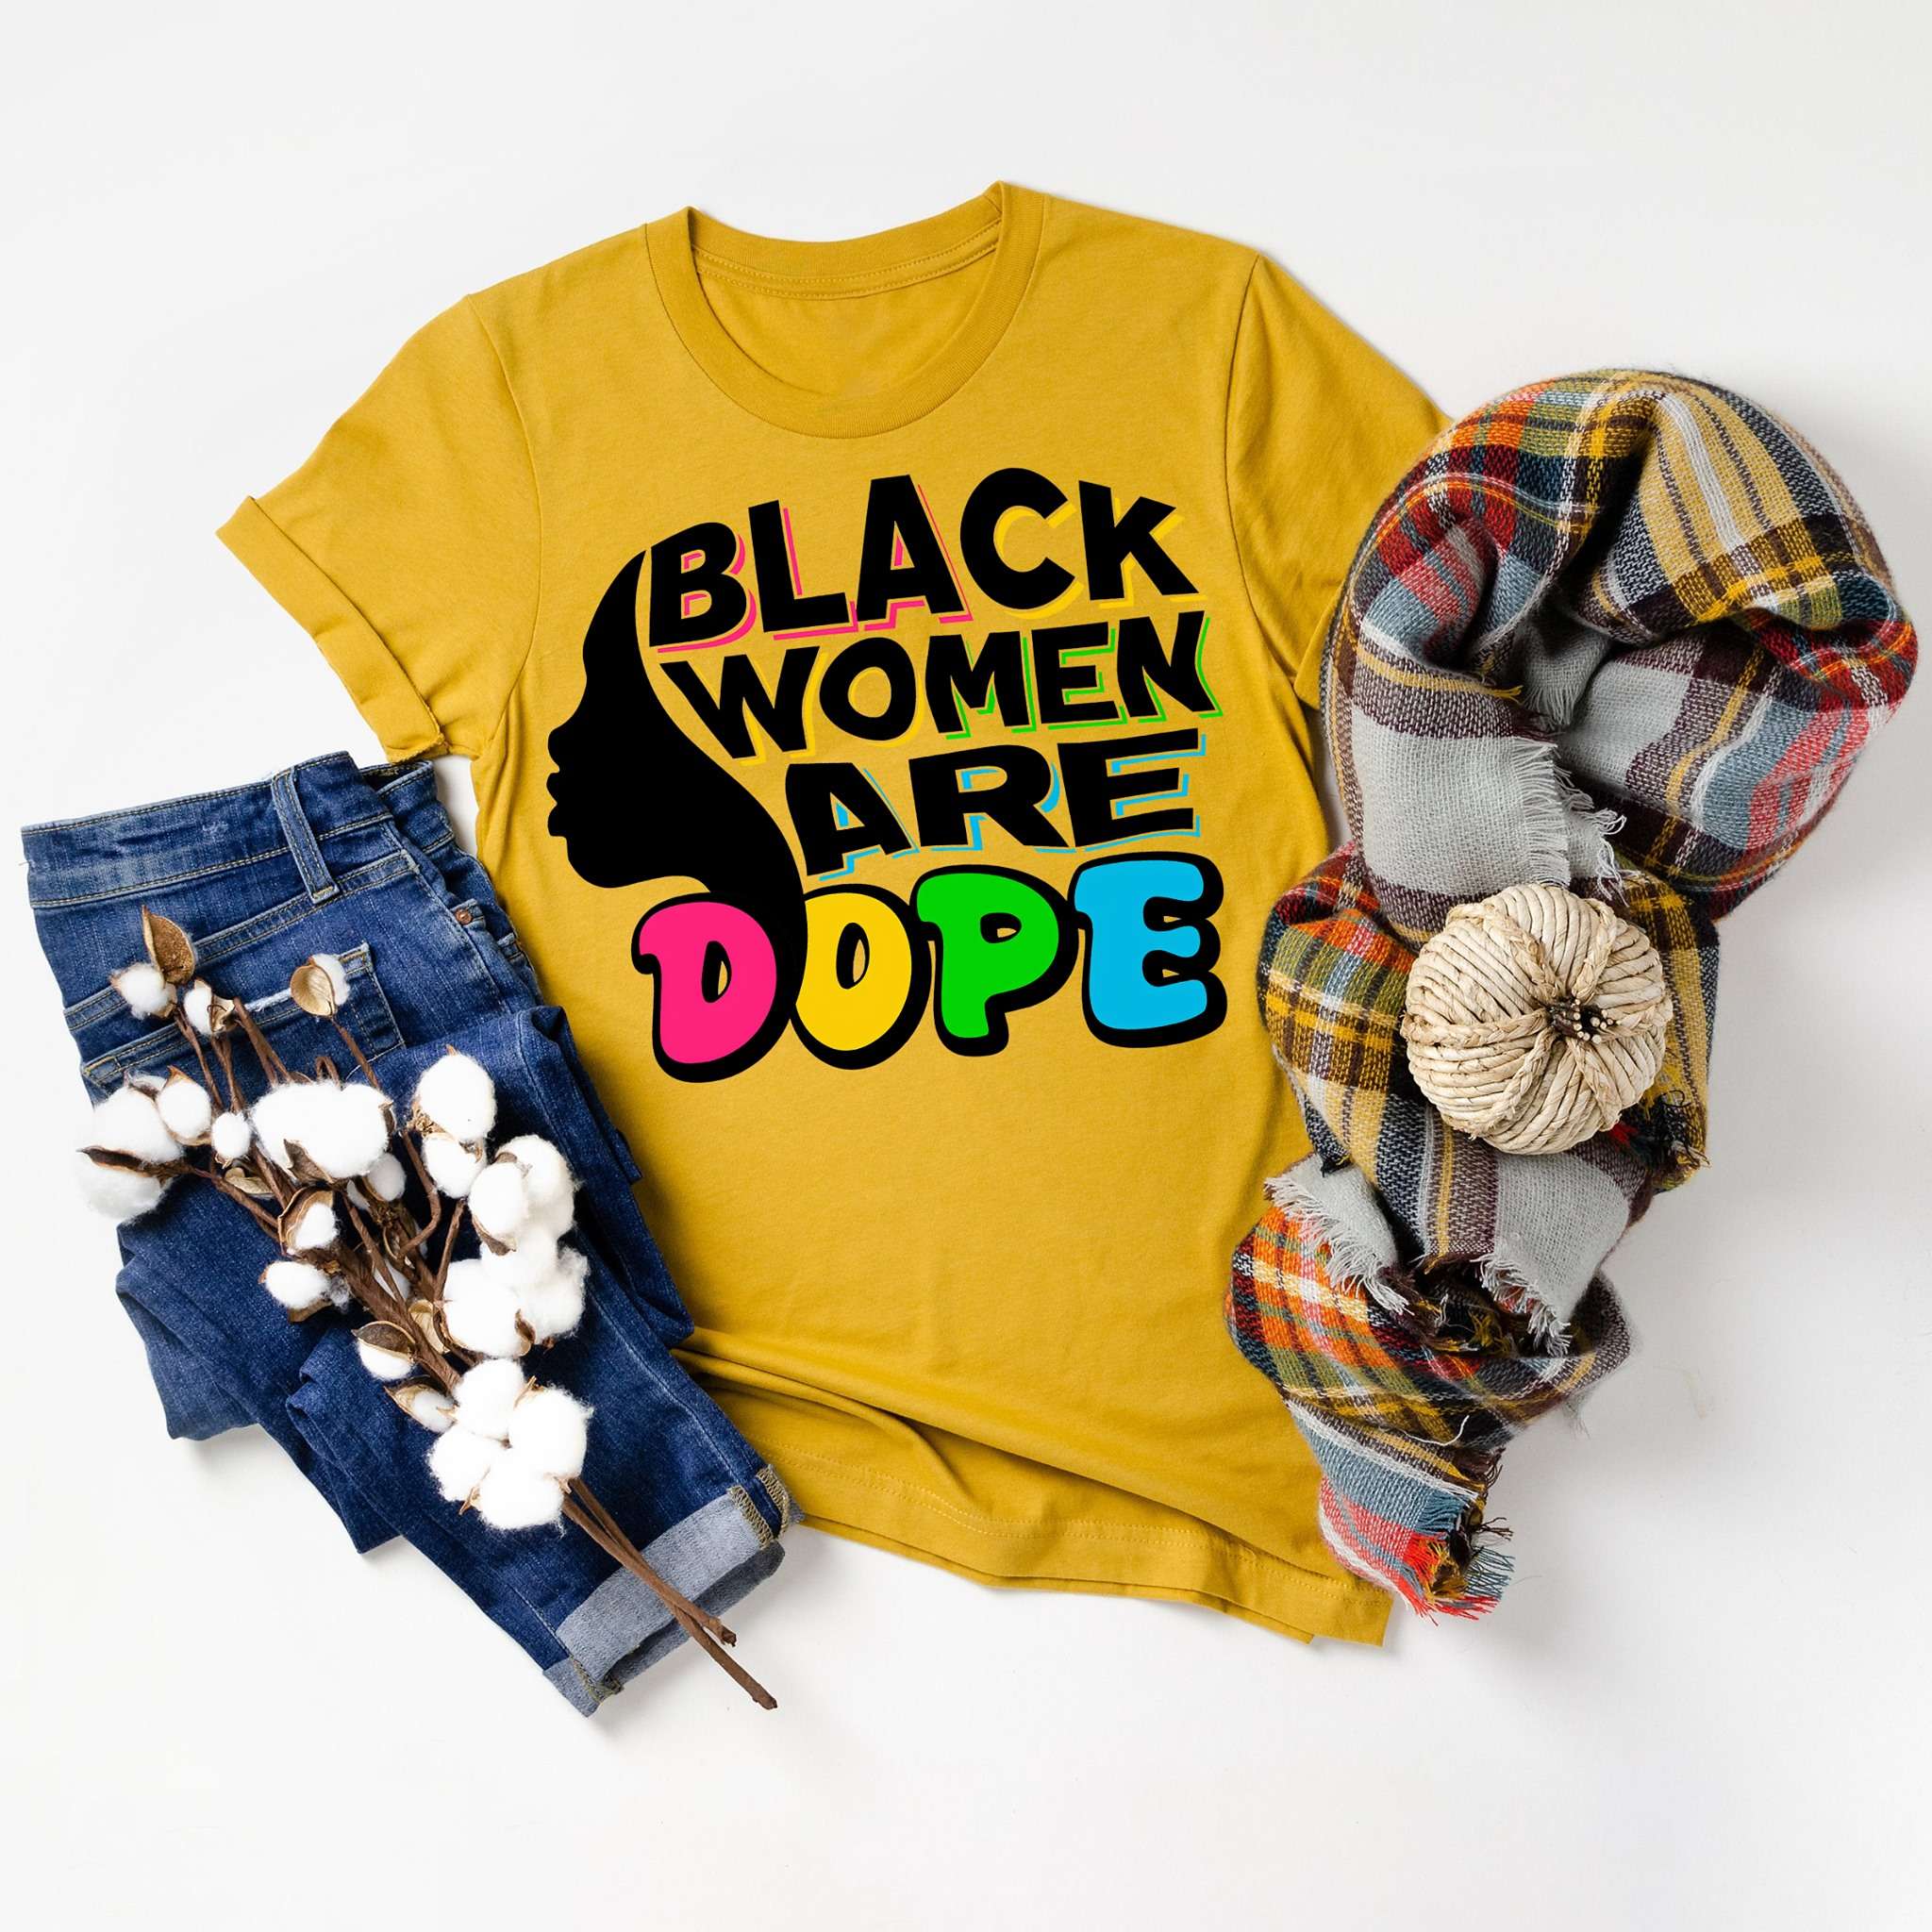 Black women are dope - Dope black women, black community